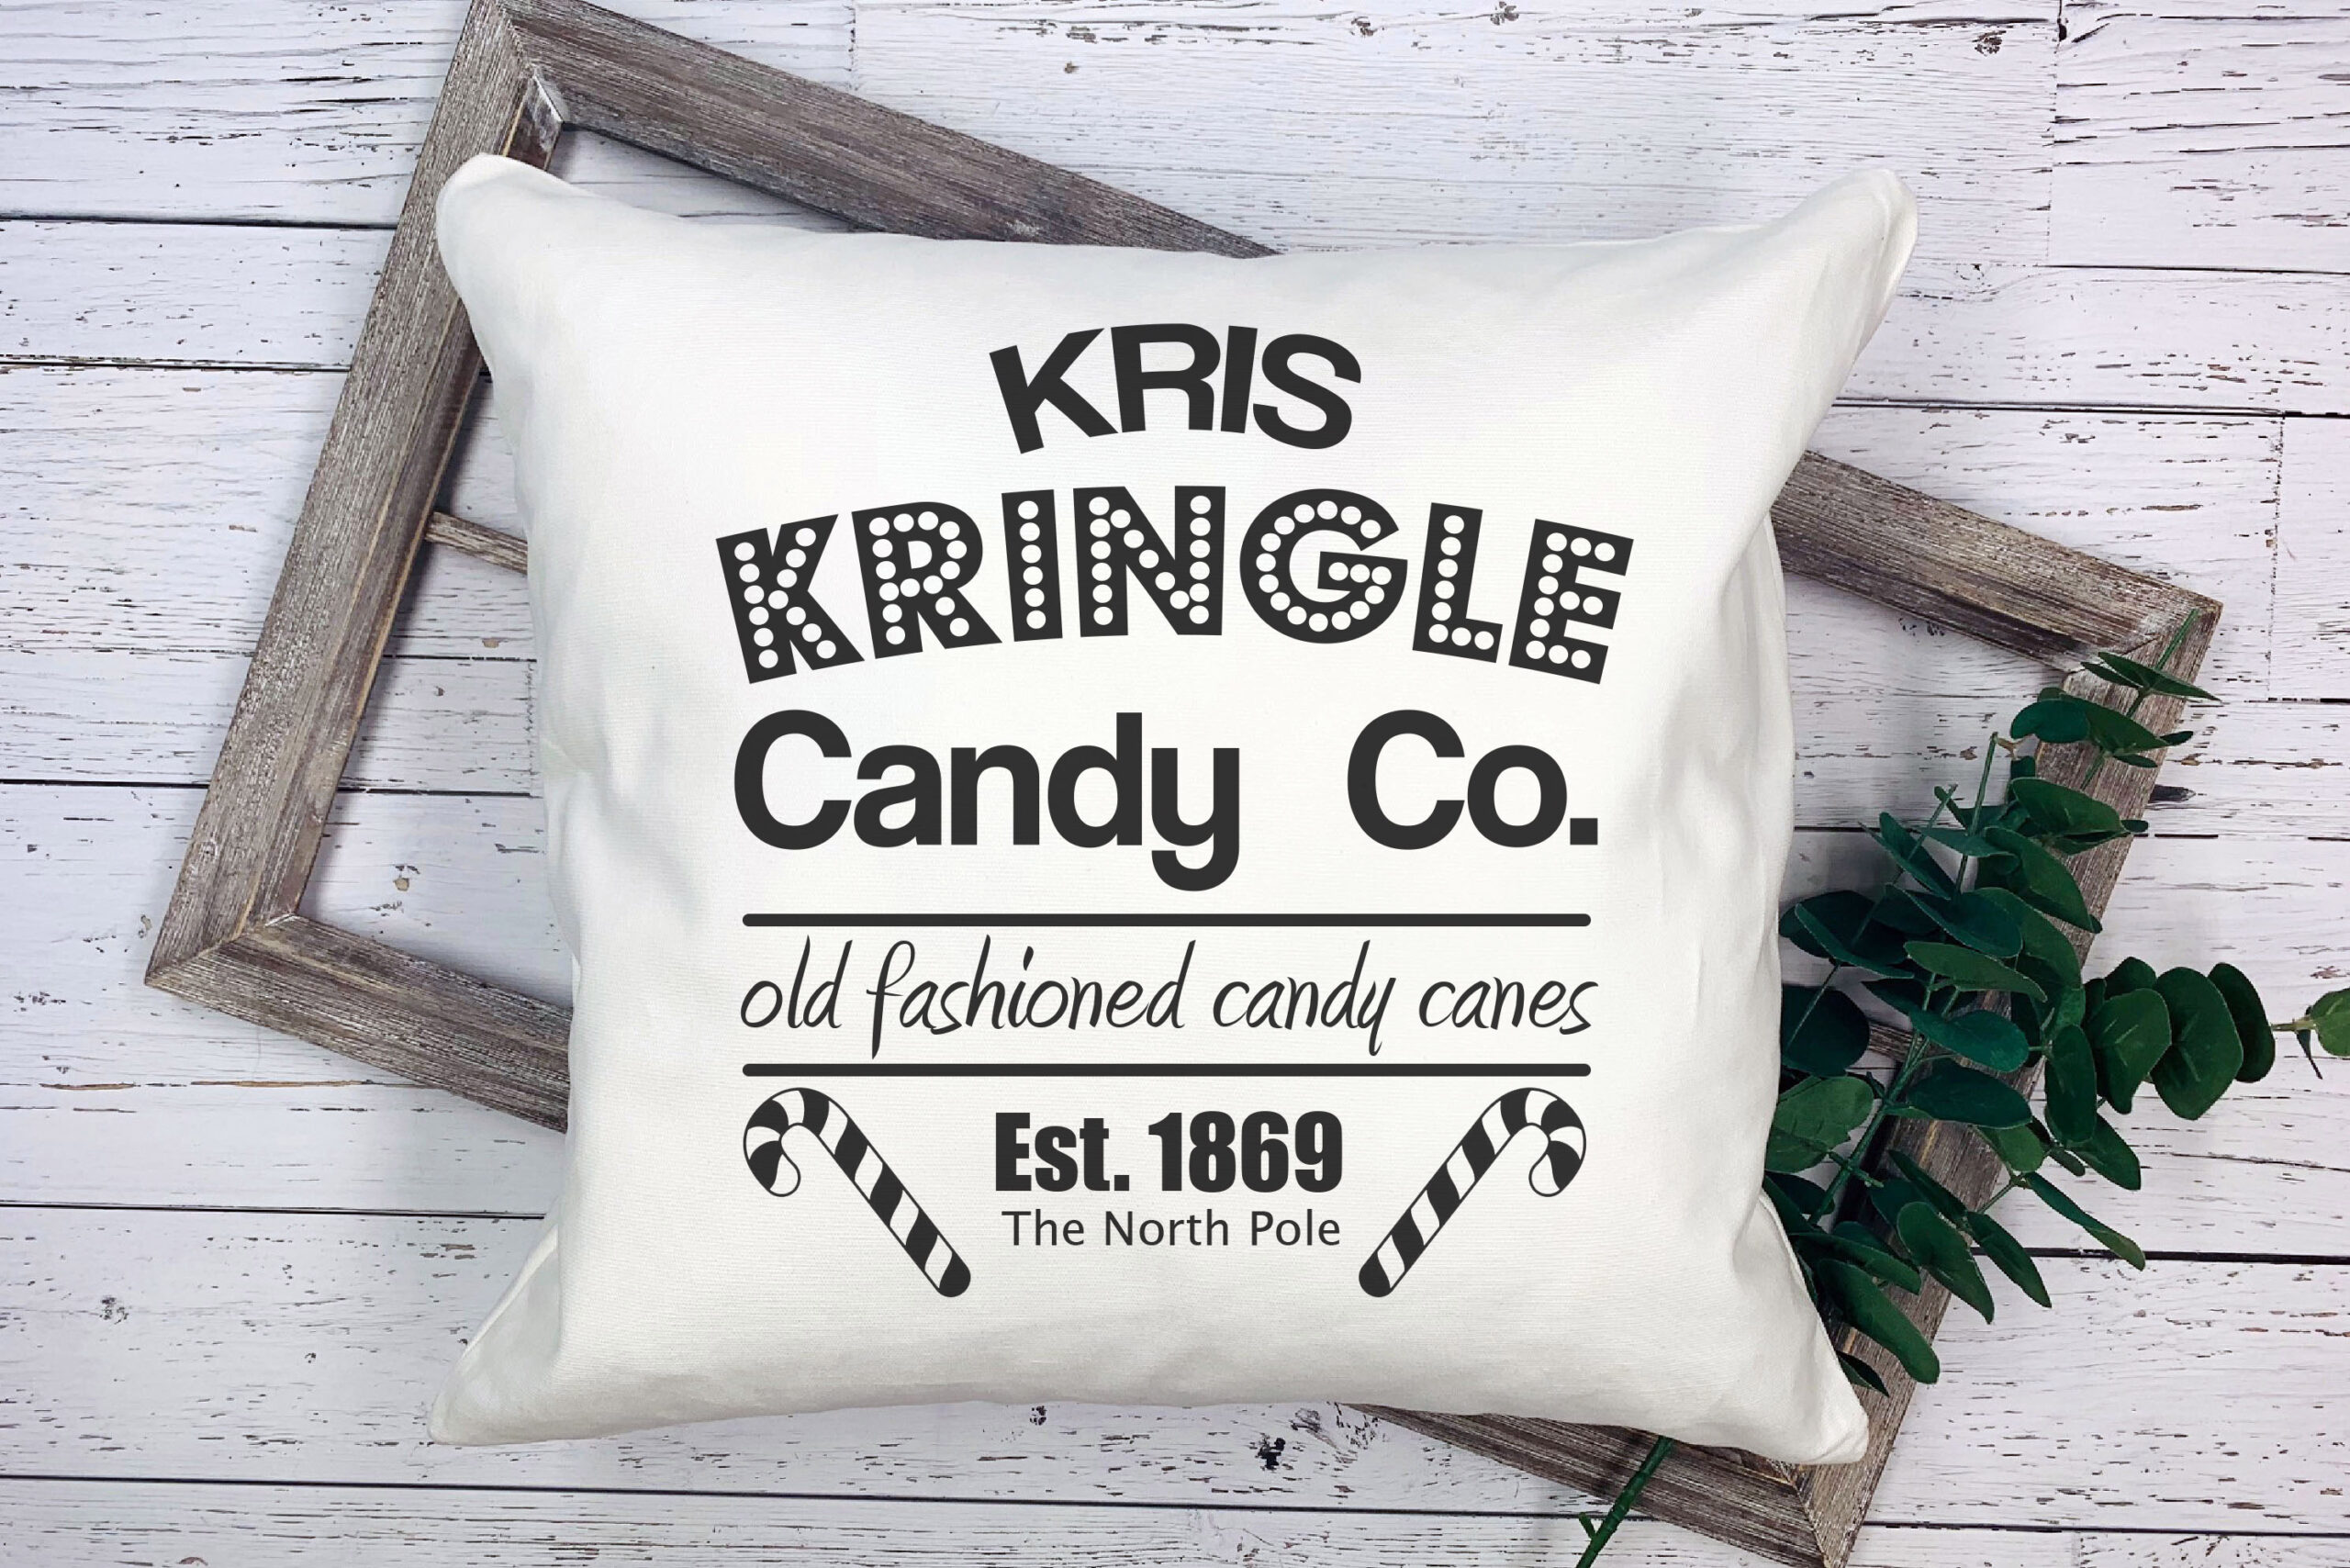 Free Kris Kringle Candy Co. SVG File